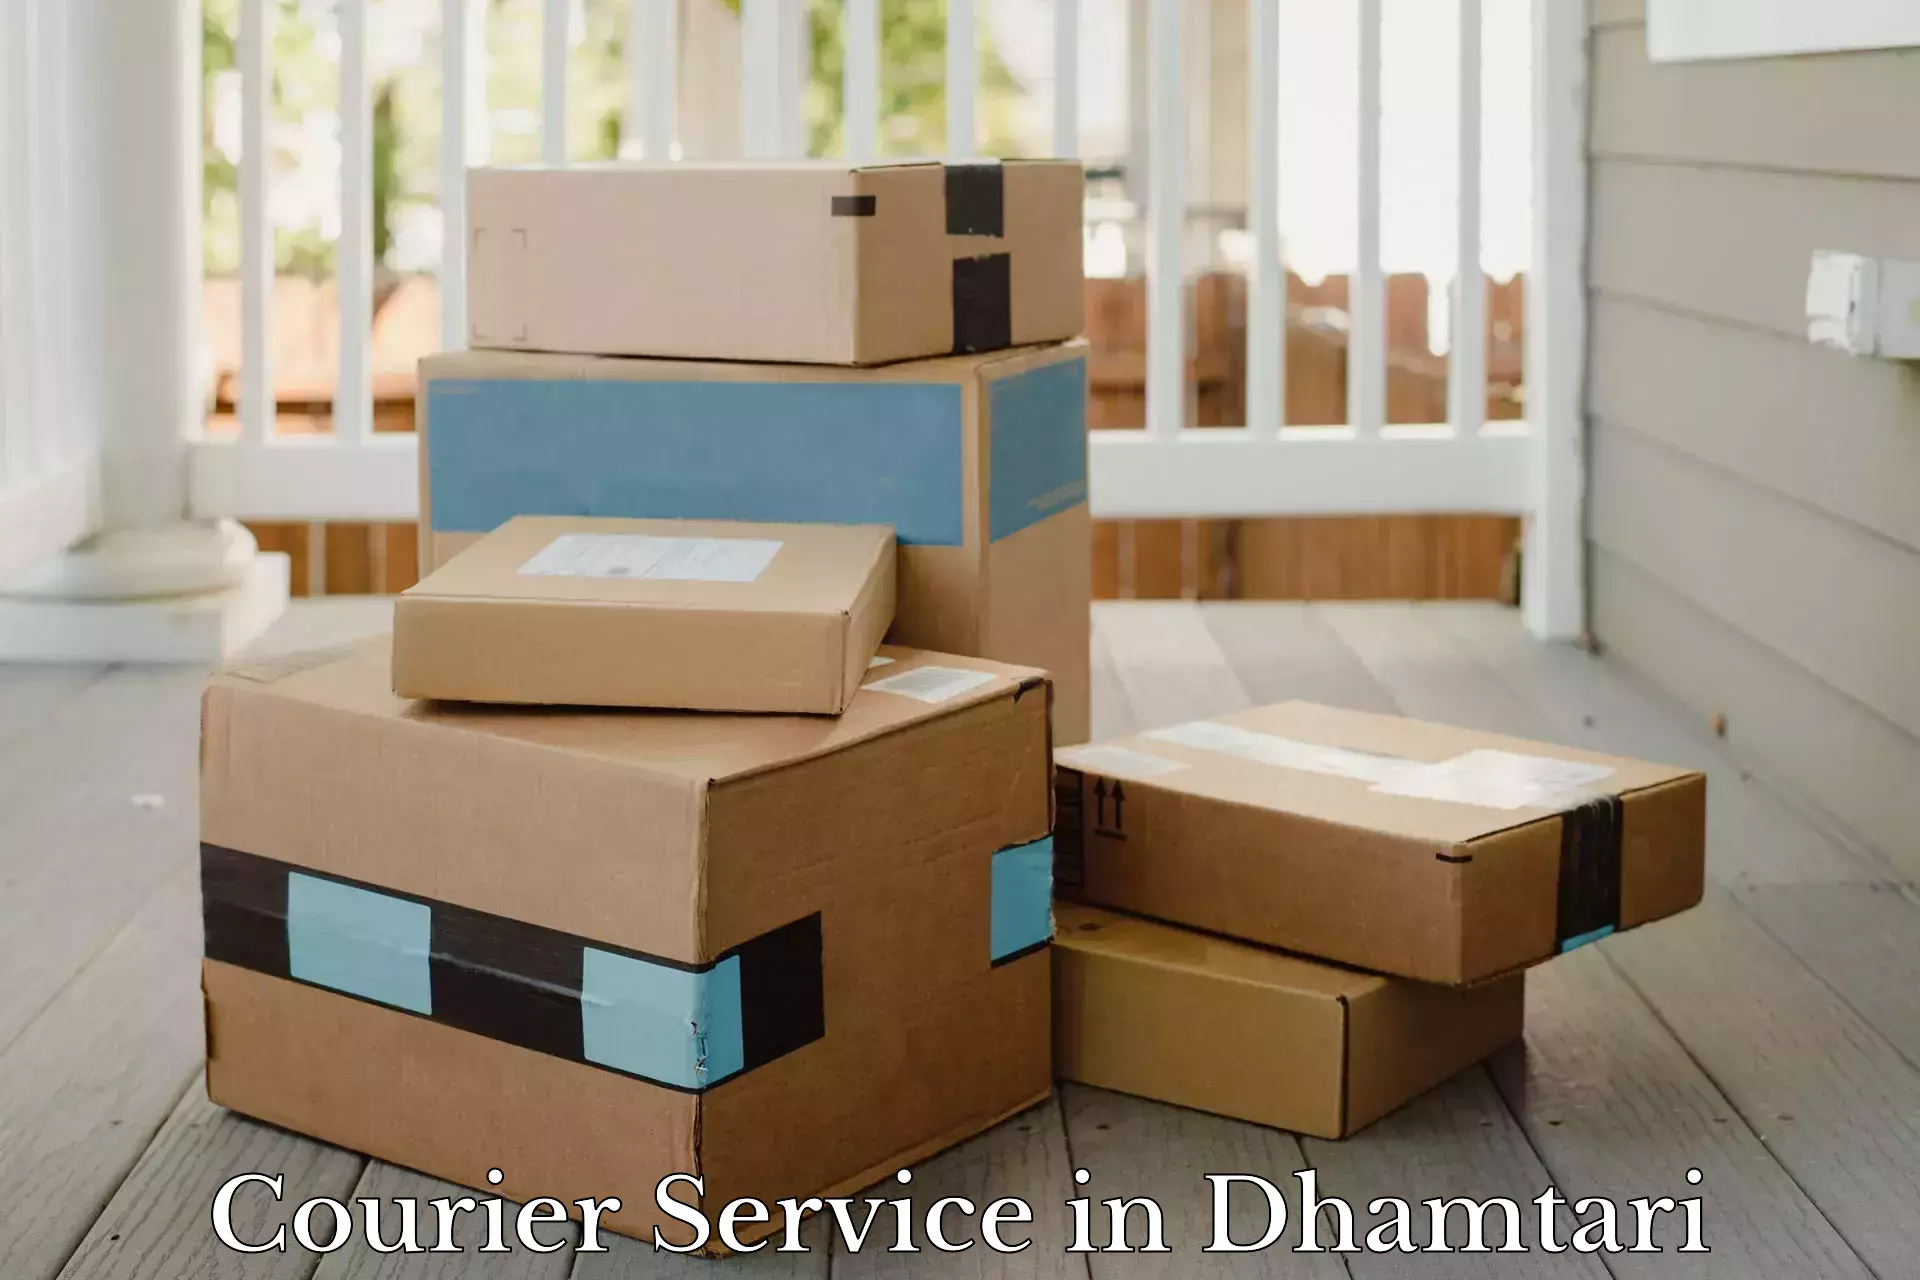 Secure package delivery in Dhamtari